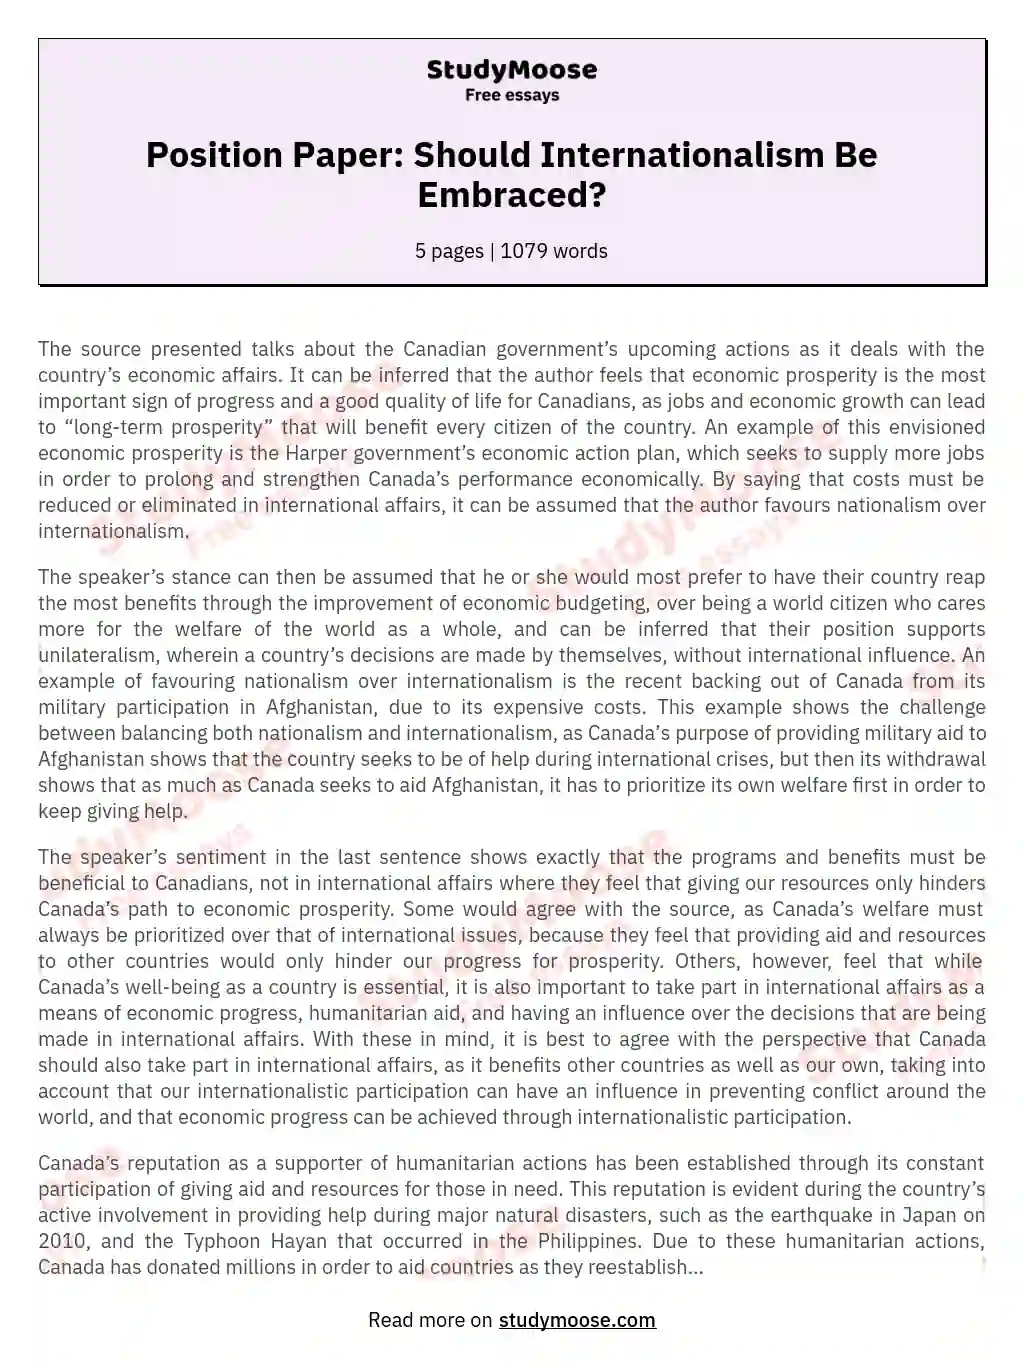 Position Paper: Should Internationalism Be Embraced? essay